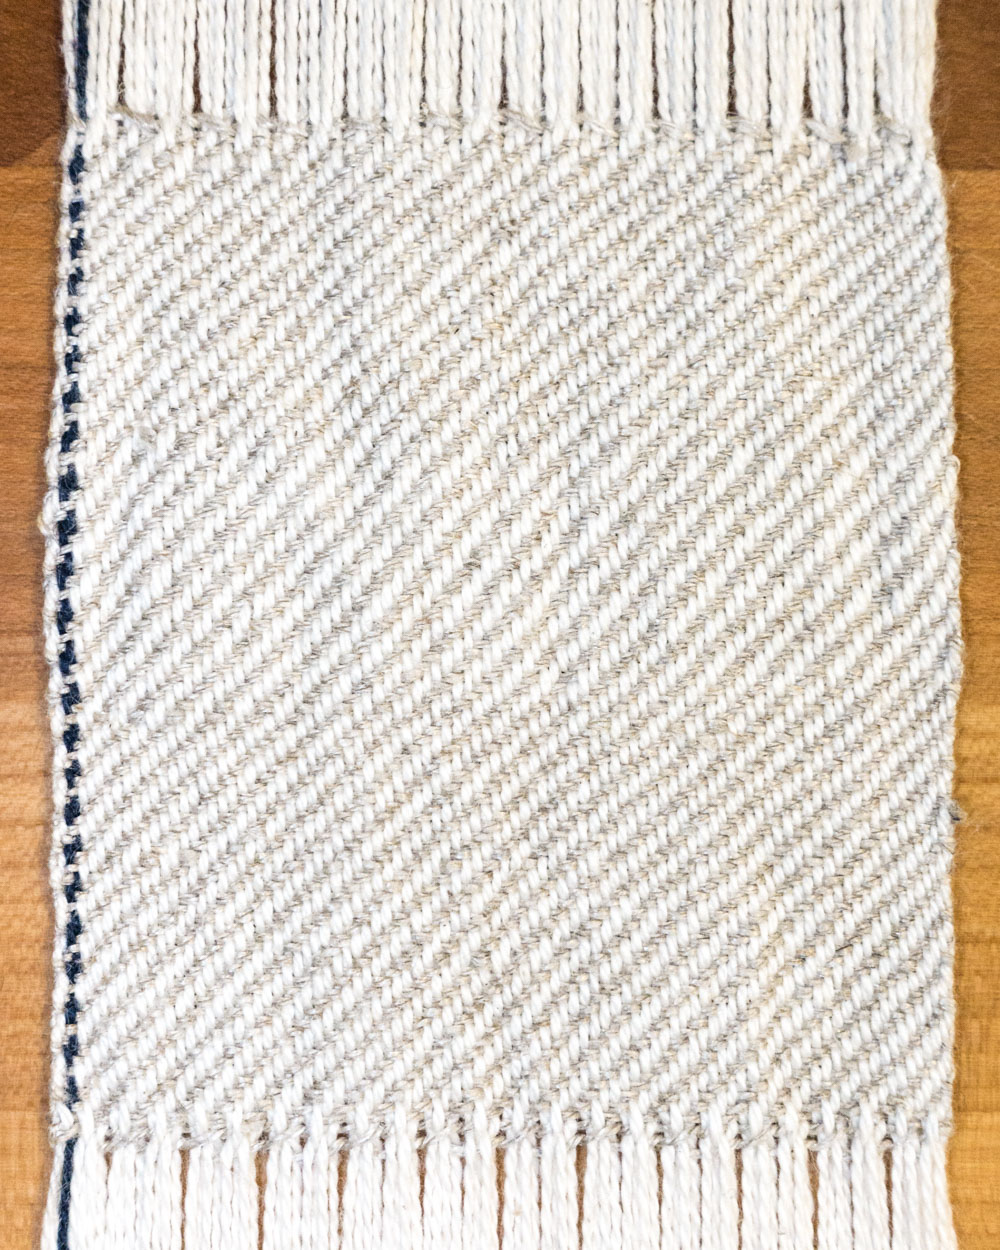 square of twill fabric with hemp weft